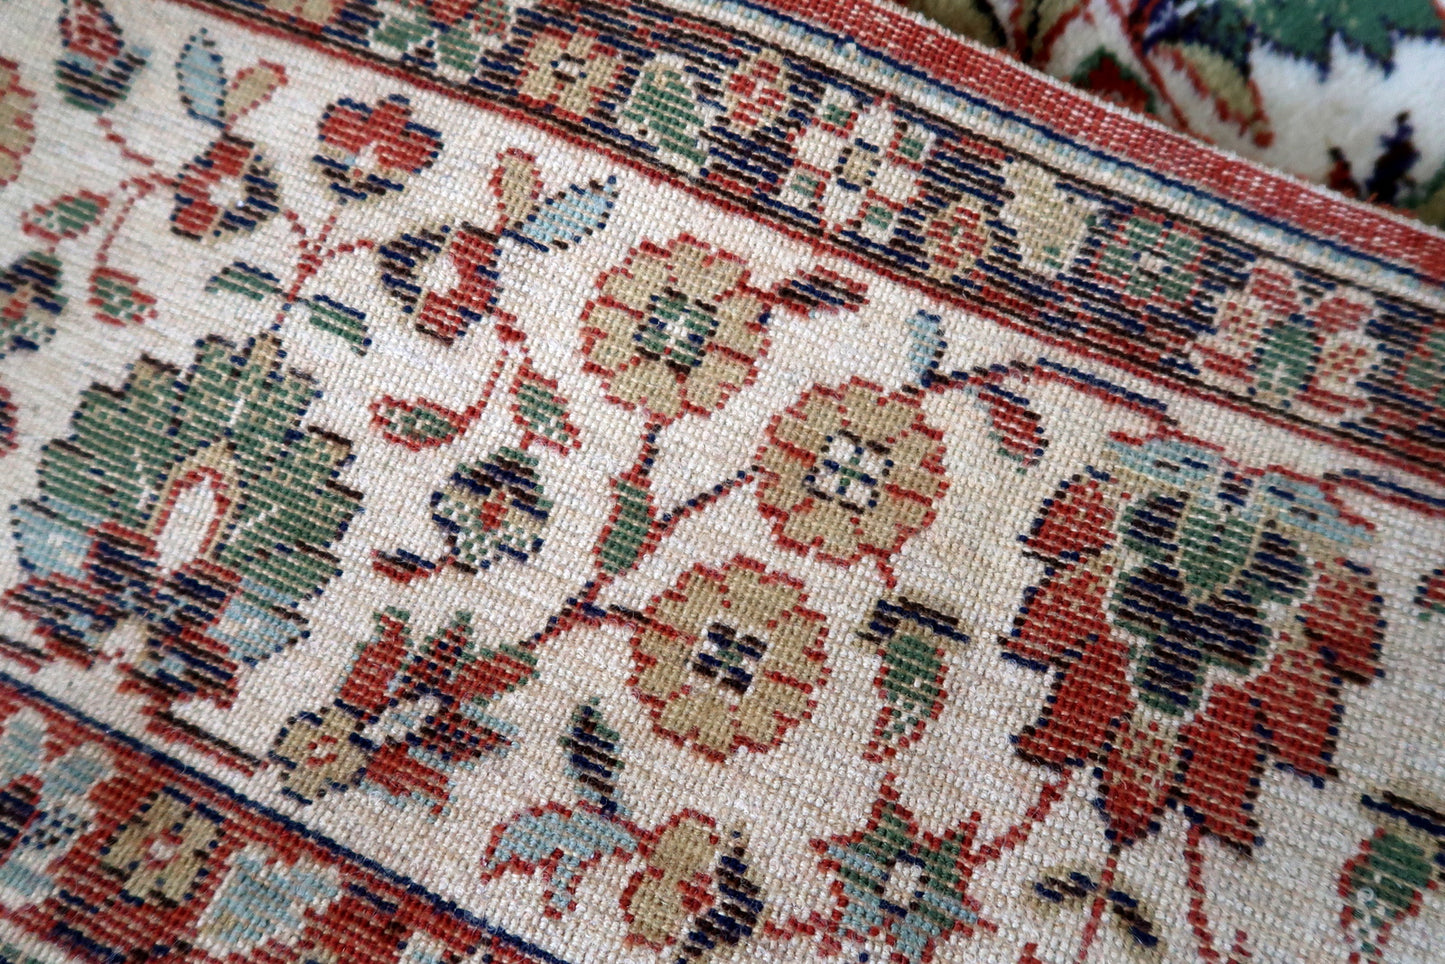 Vintage Persian Qum style rug 8' x 11.5' (245cm x 352cm) 1970s - 1C927